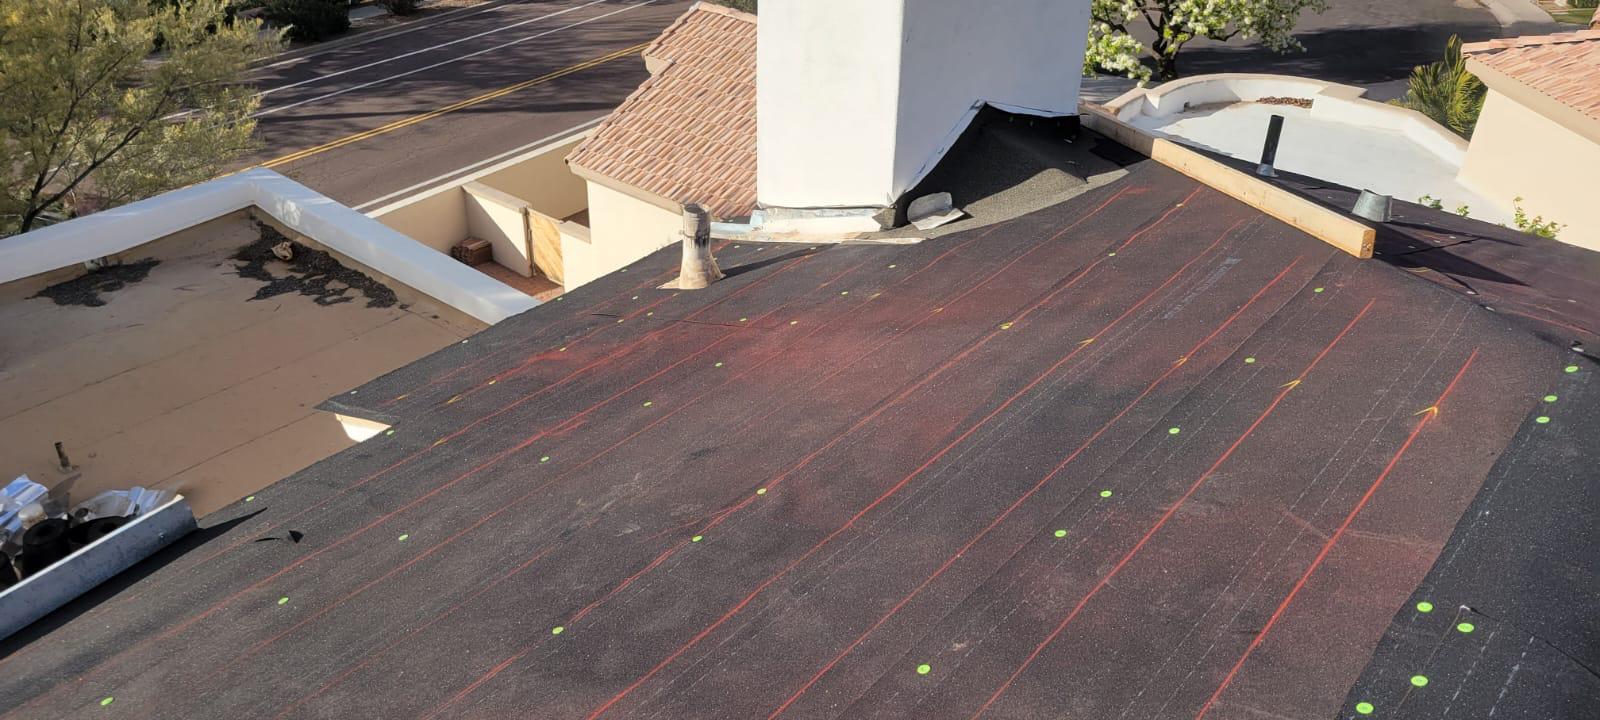 Ironwood Village rooftop undergoing a tile re-felt with Behmer's expert underlayment application.